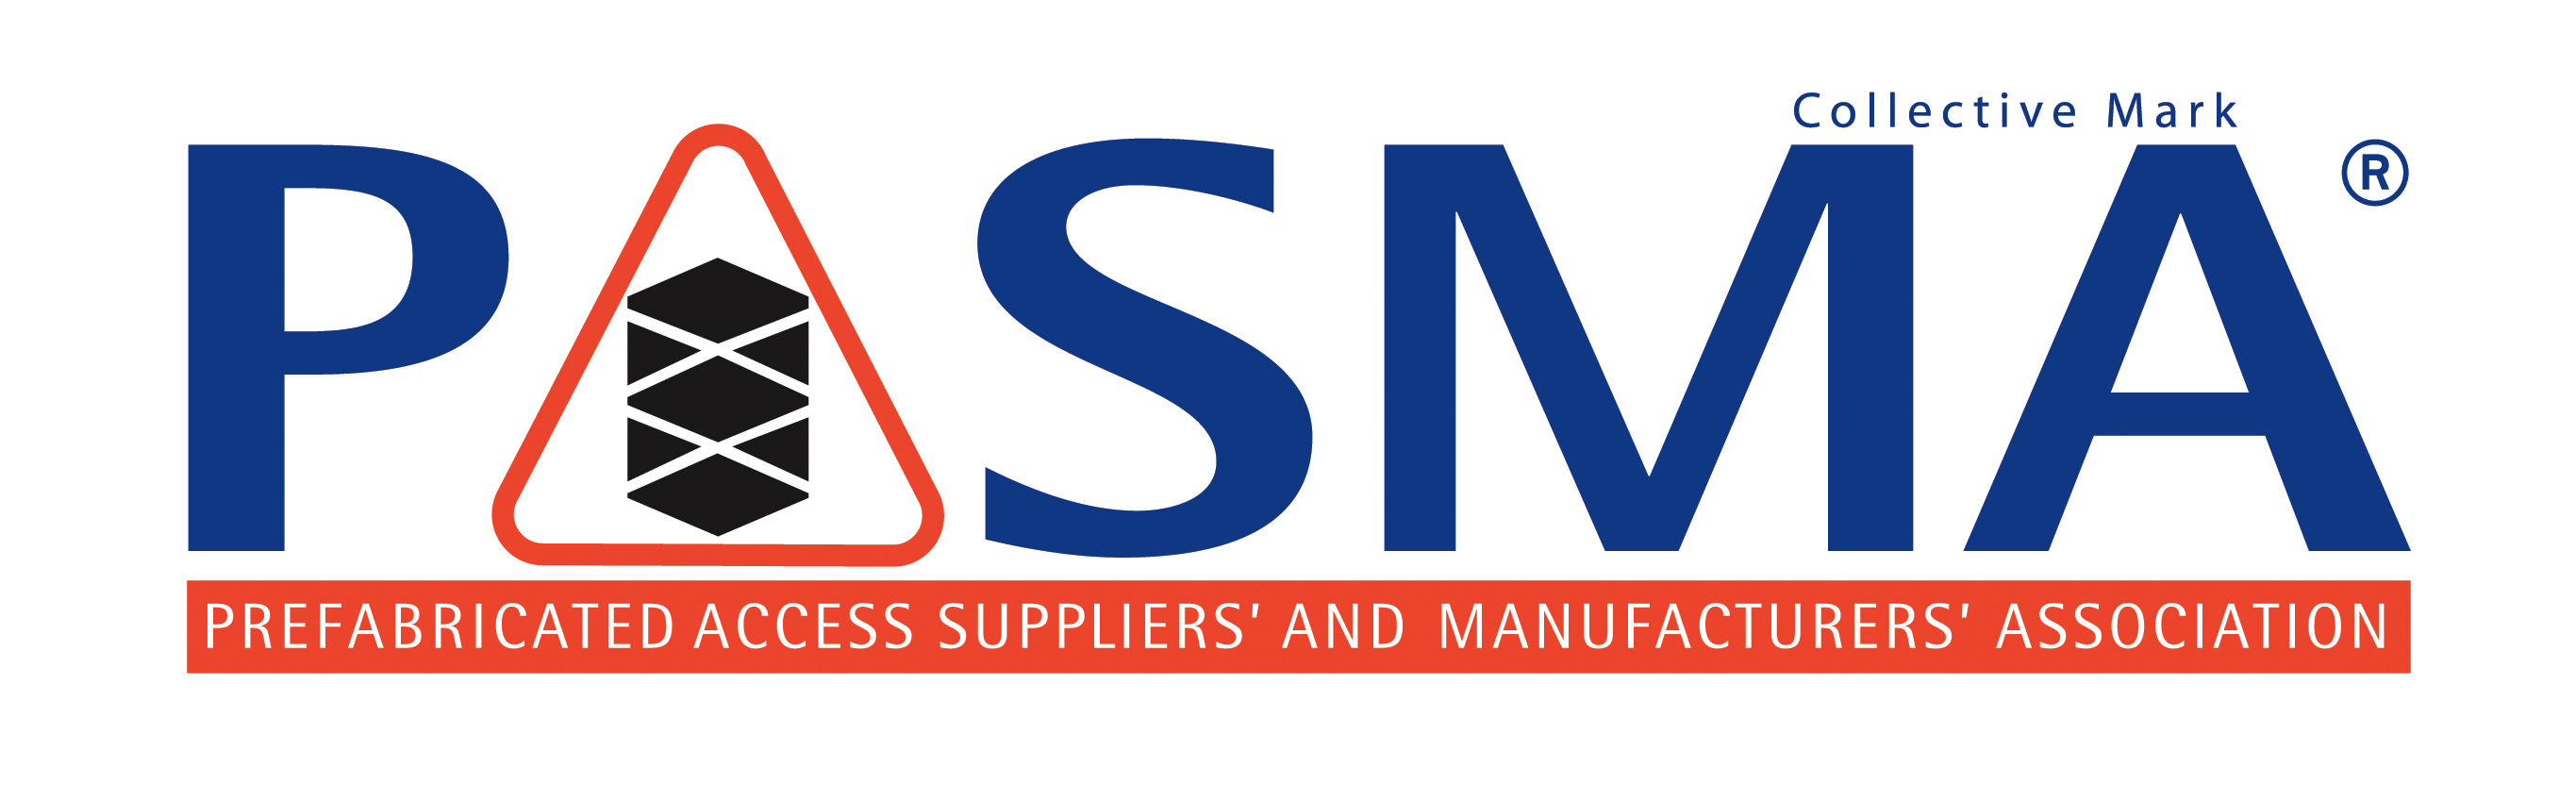 Prefabricated Access Suppliers' & Manufacturers' Association Ltd (PASMA) logo